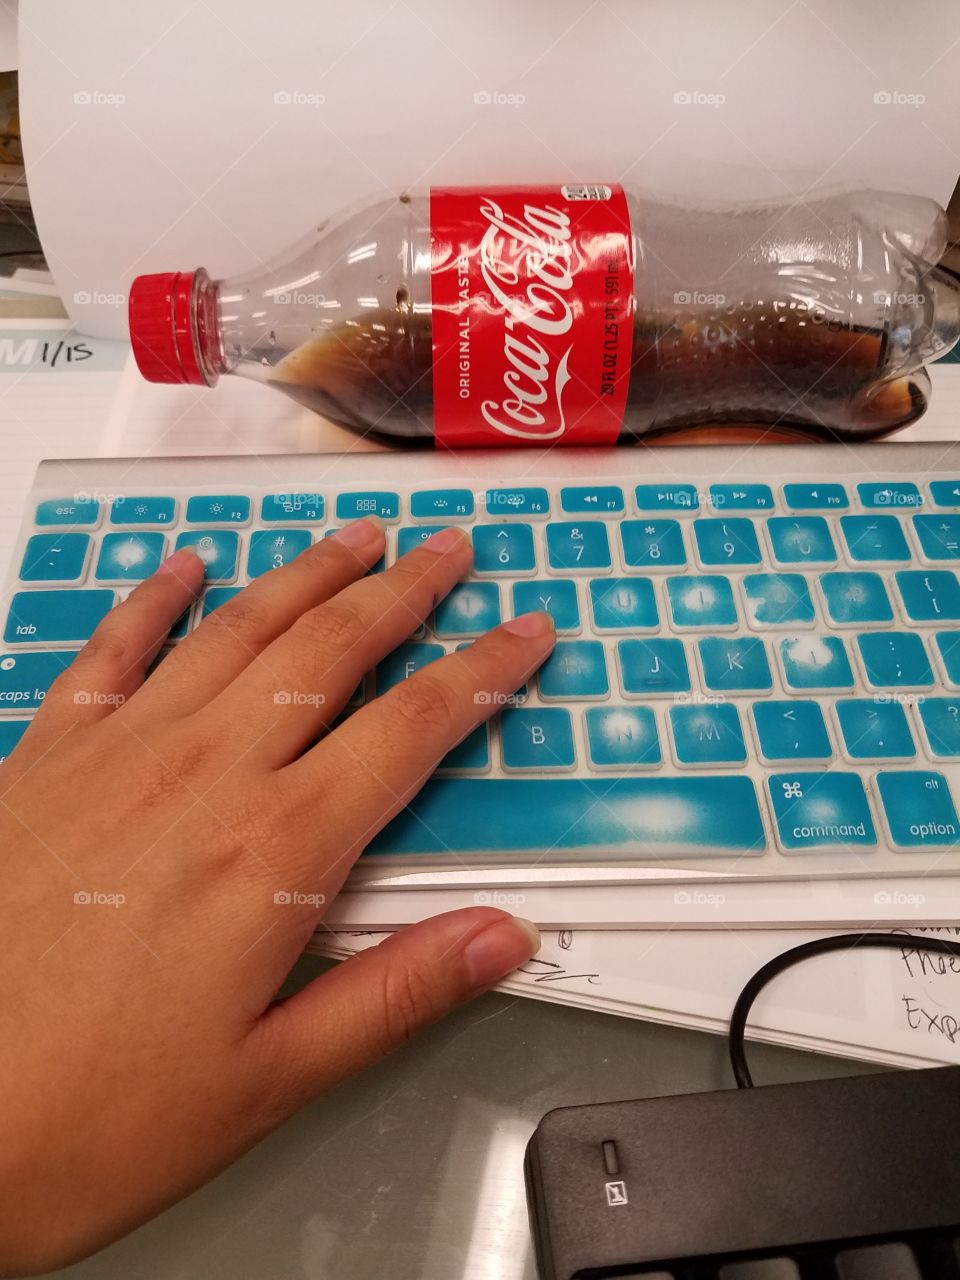 Coca-Cola at work